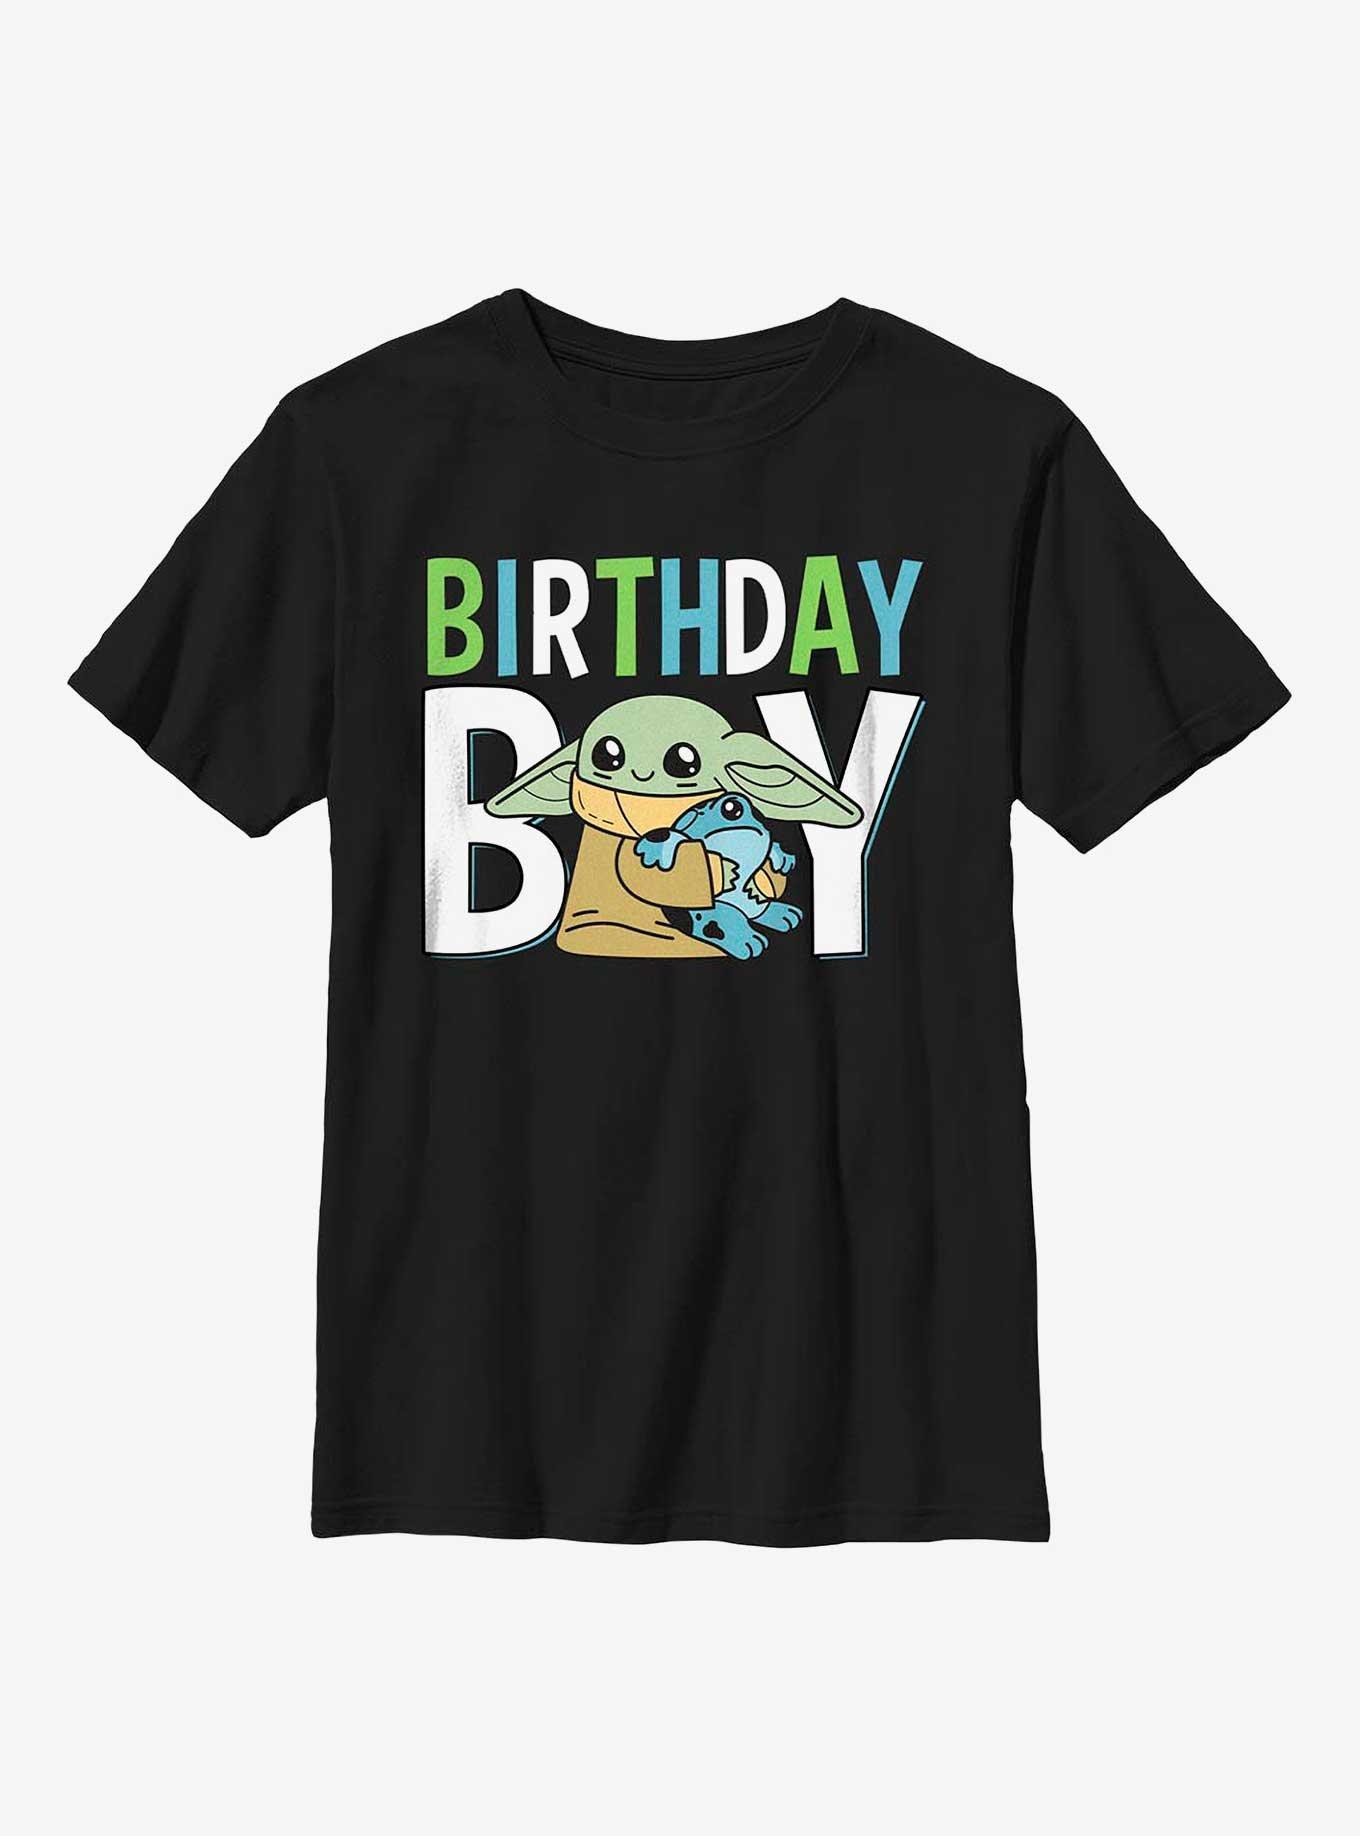 Star Wars The Mandalorian Birthday Boy Grogu Hug Youth T-Shirt - BLACK ...